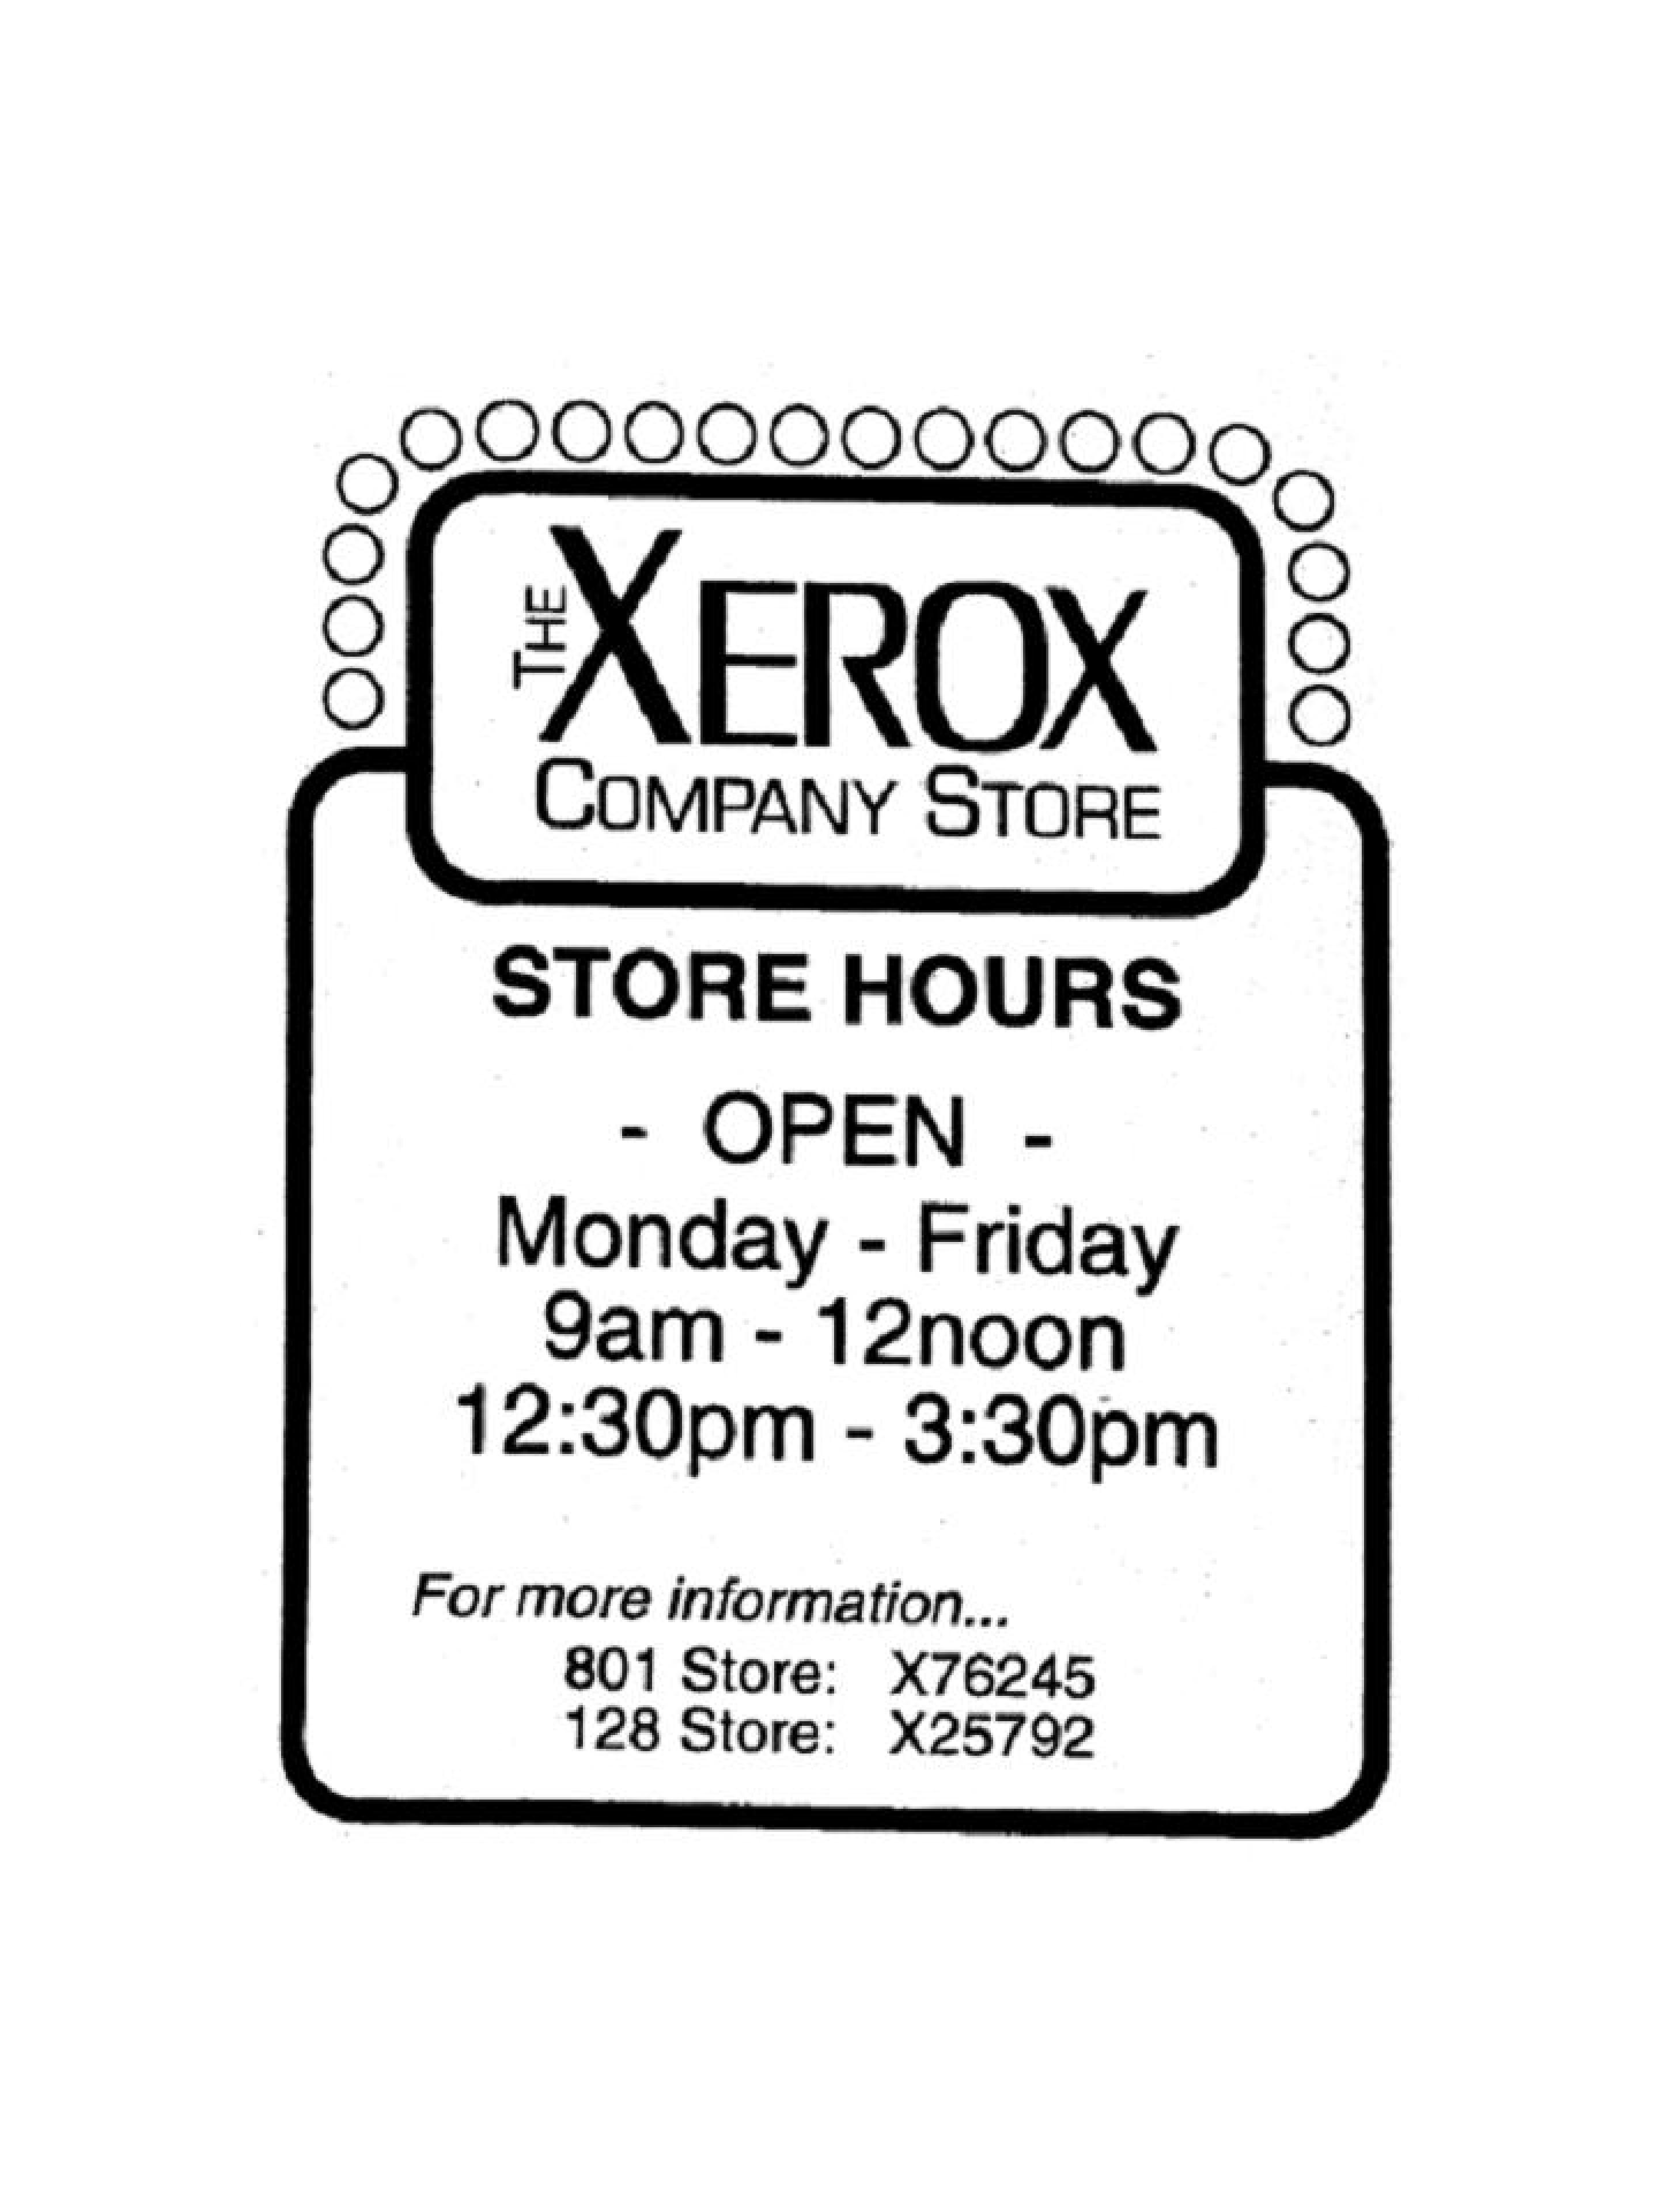 THE XEROX COMPANY STORE